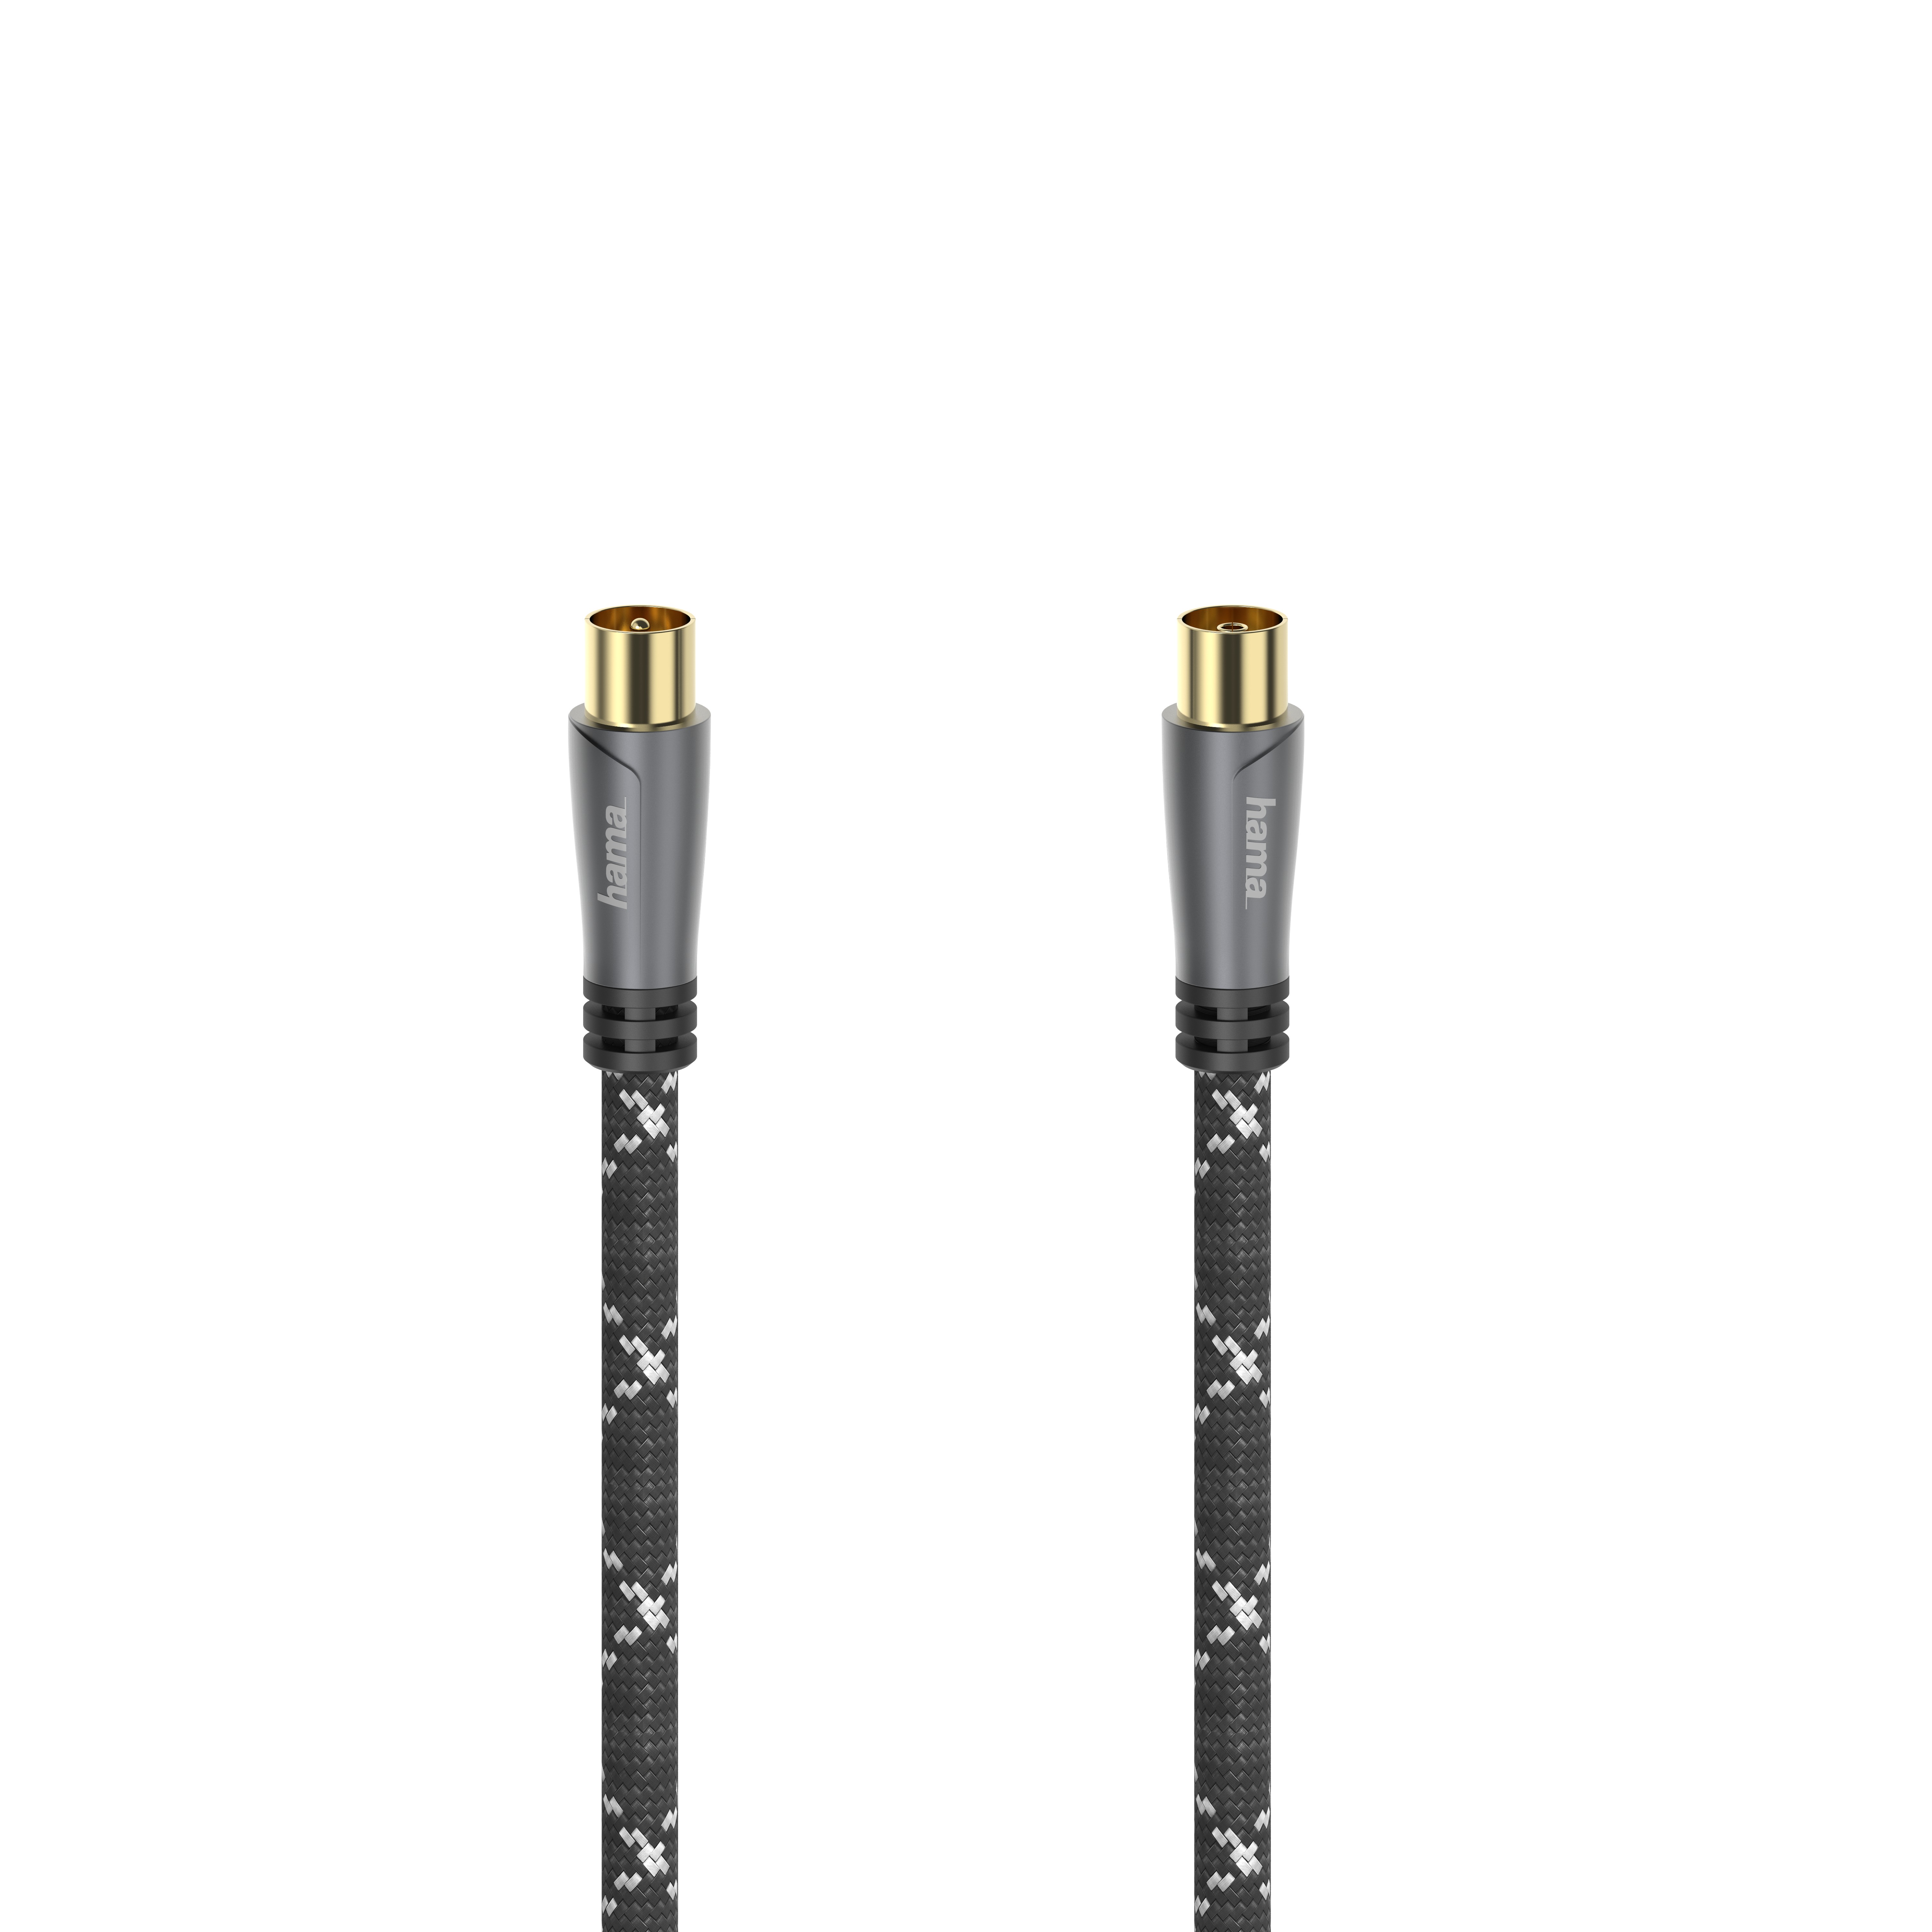 Hama Antennen-Kabel-Stecker-Kupplung, Metall, vergoldet, 5M